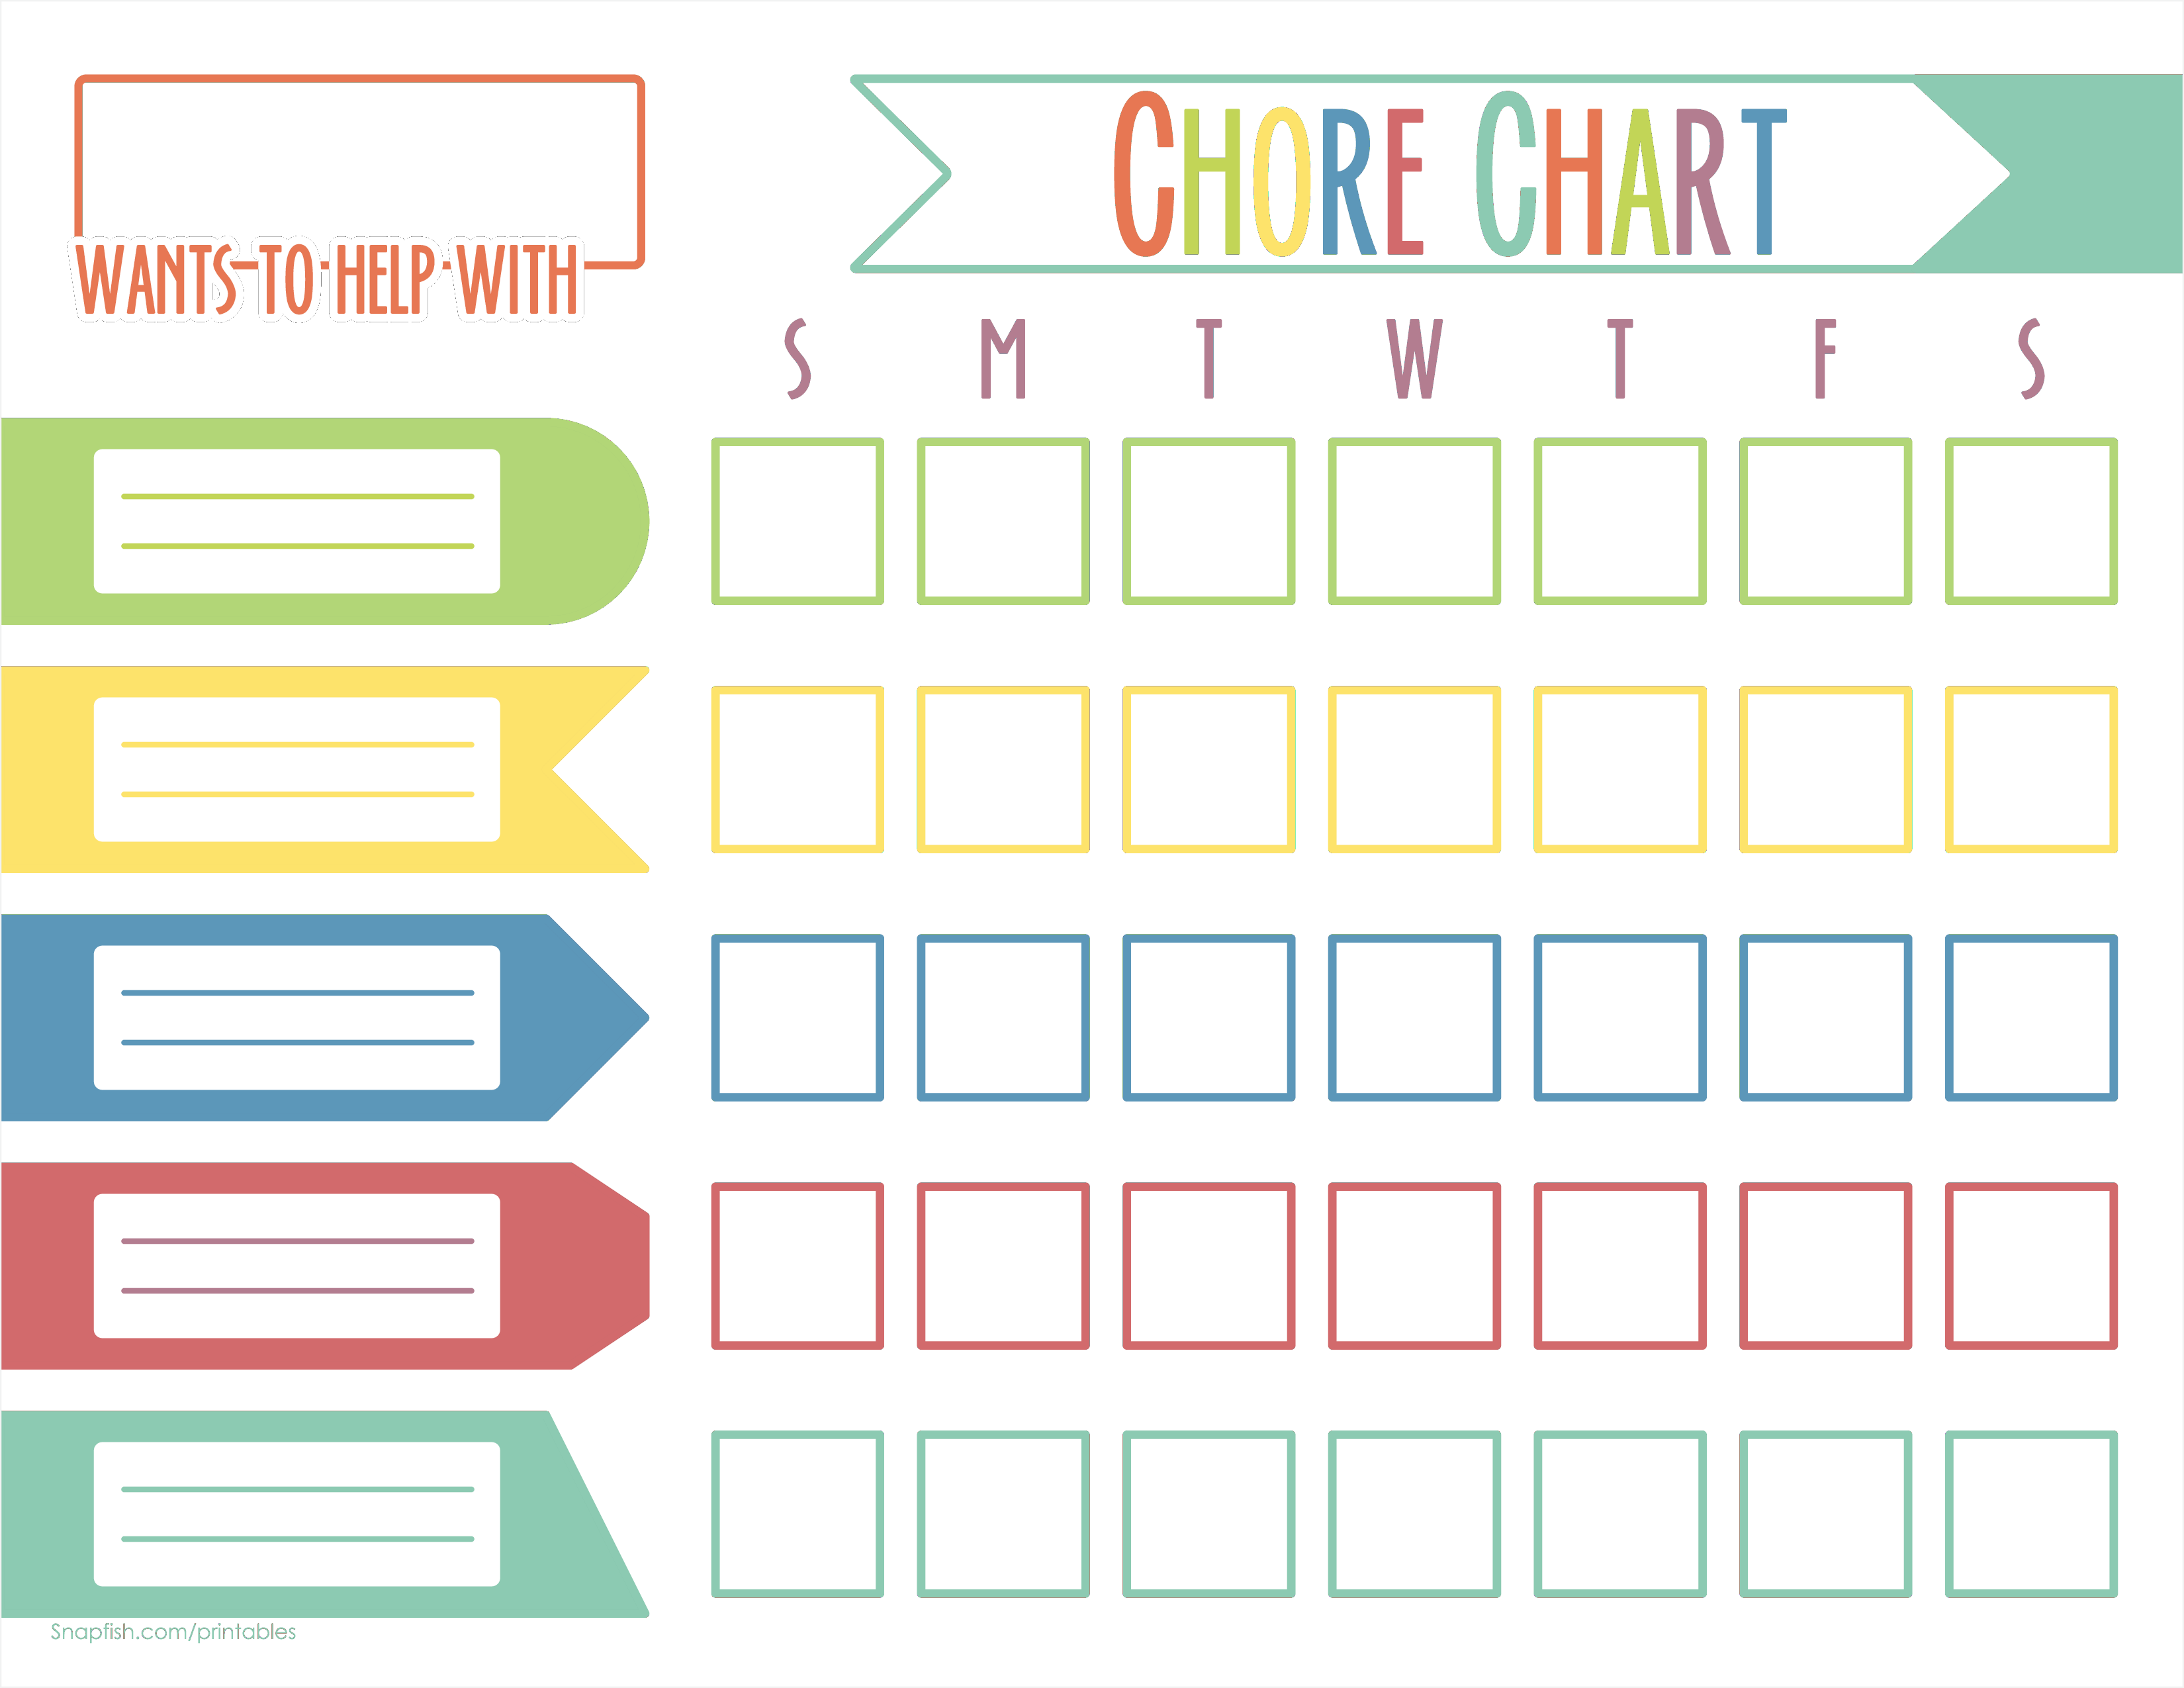 chore chart for kids plantilla imagen principal